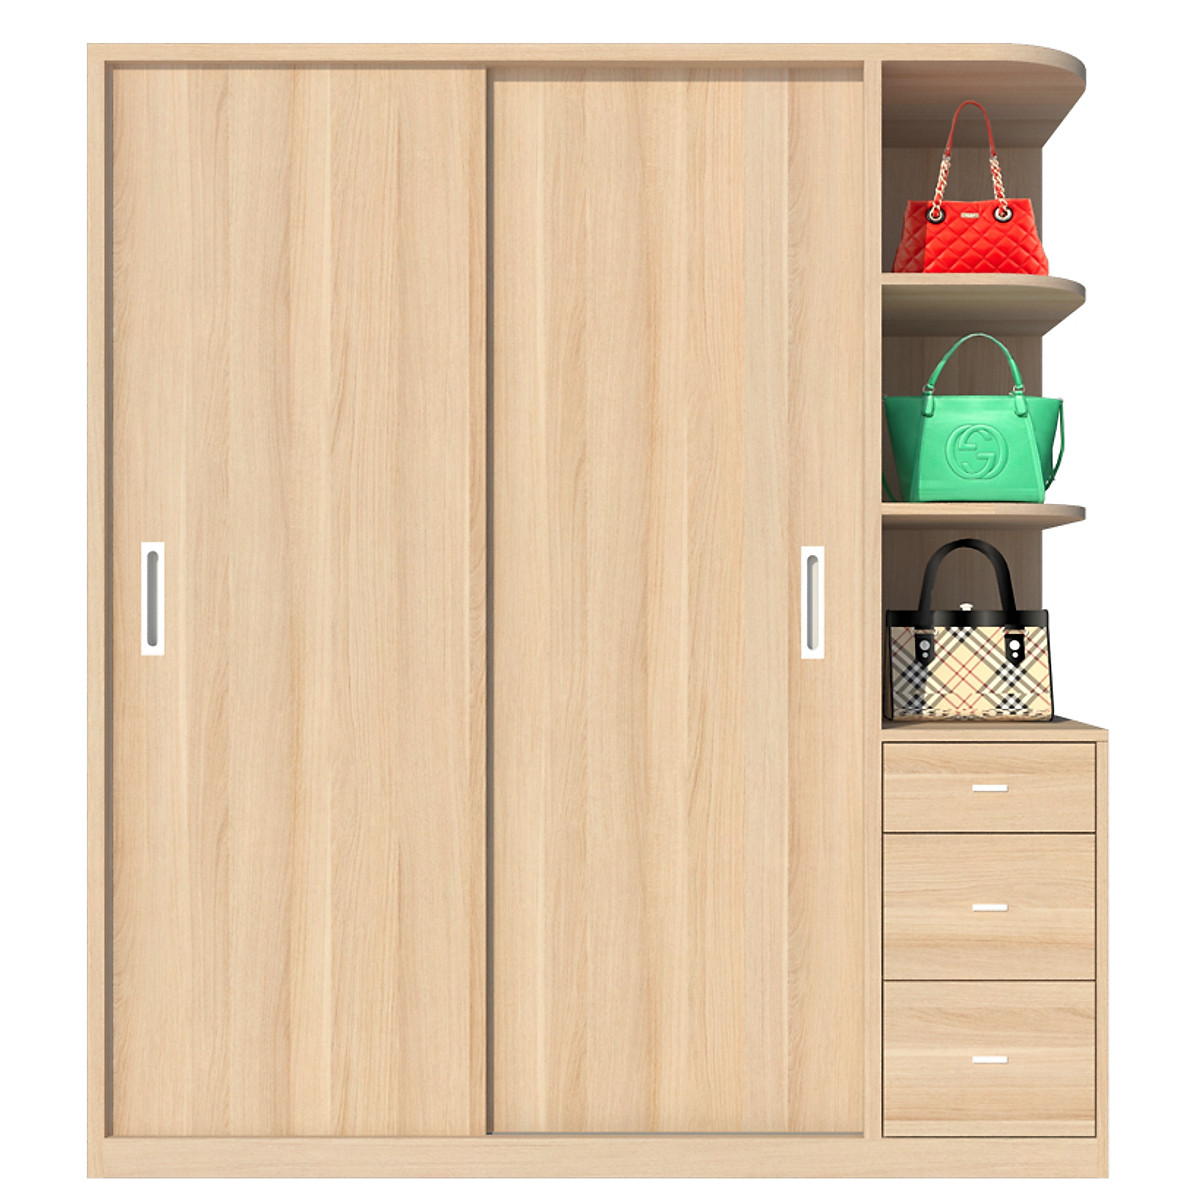 Tủ quần áo gỗ MDF Tundo cửa lùa màu sồi nhạt 180 x 55 x 200cm